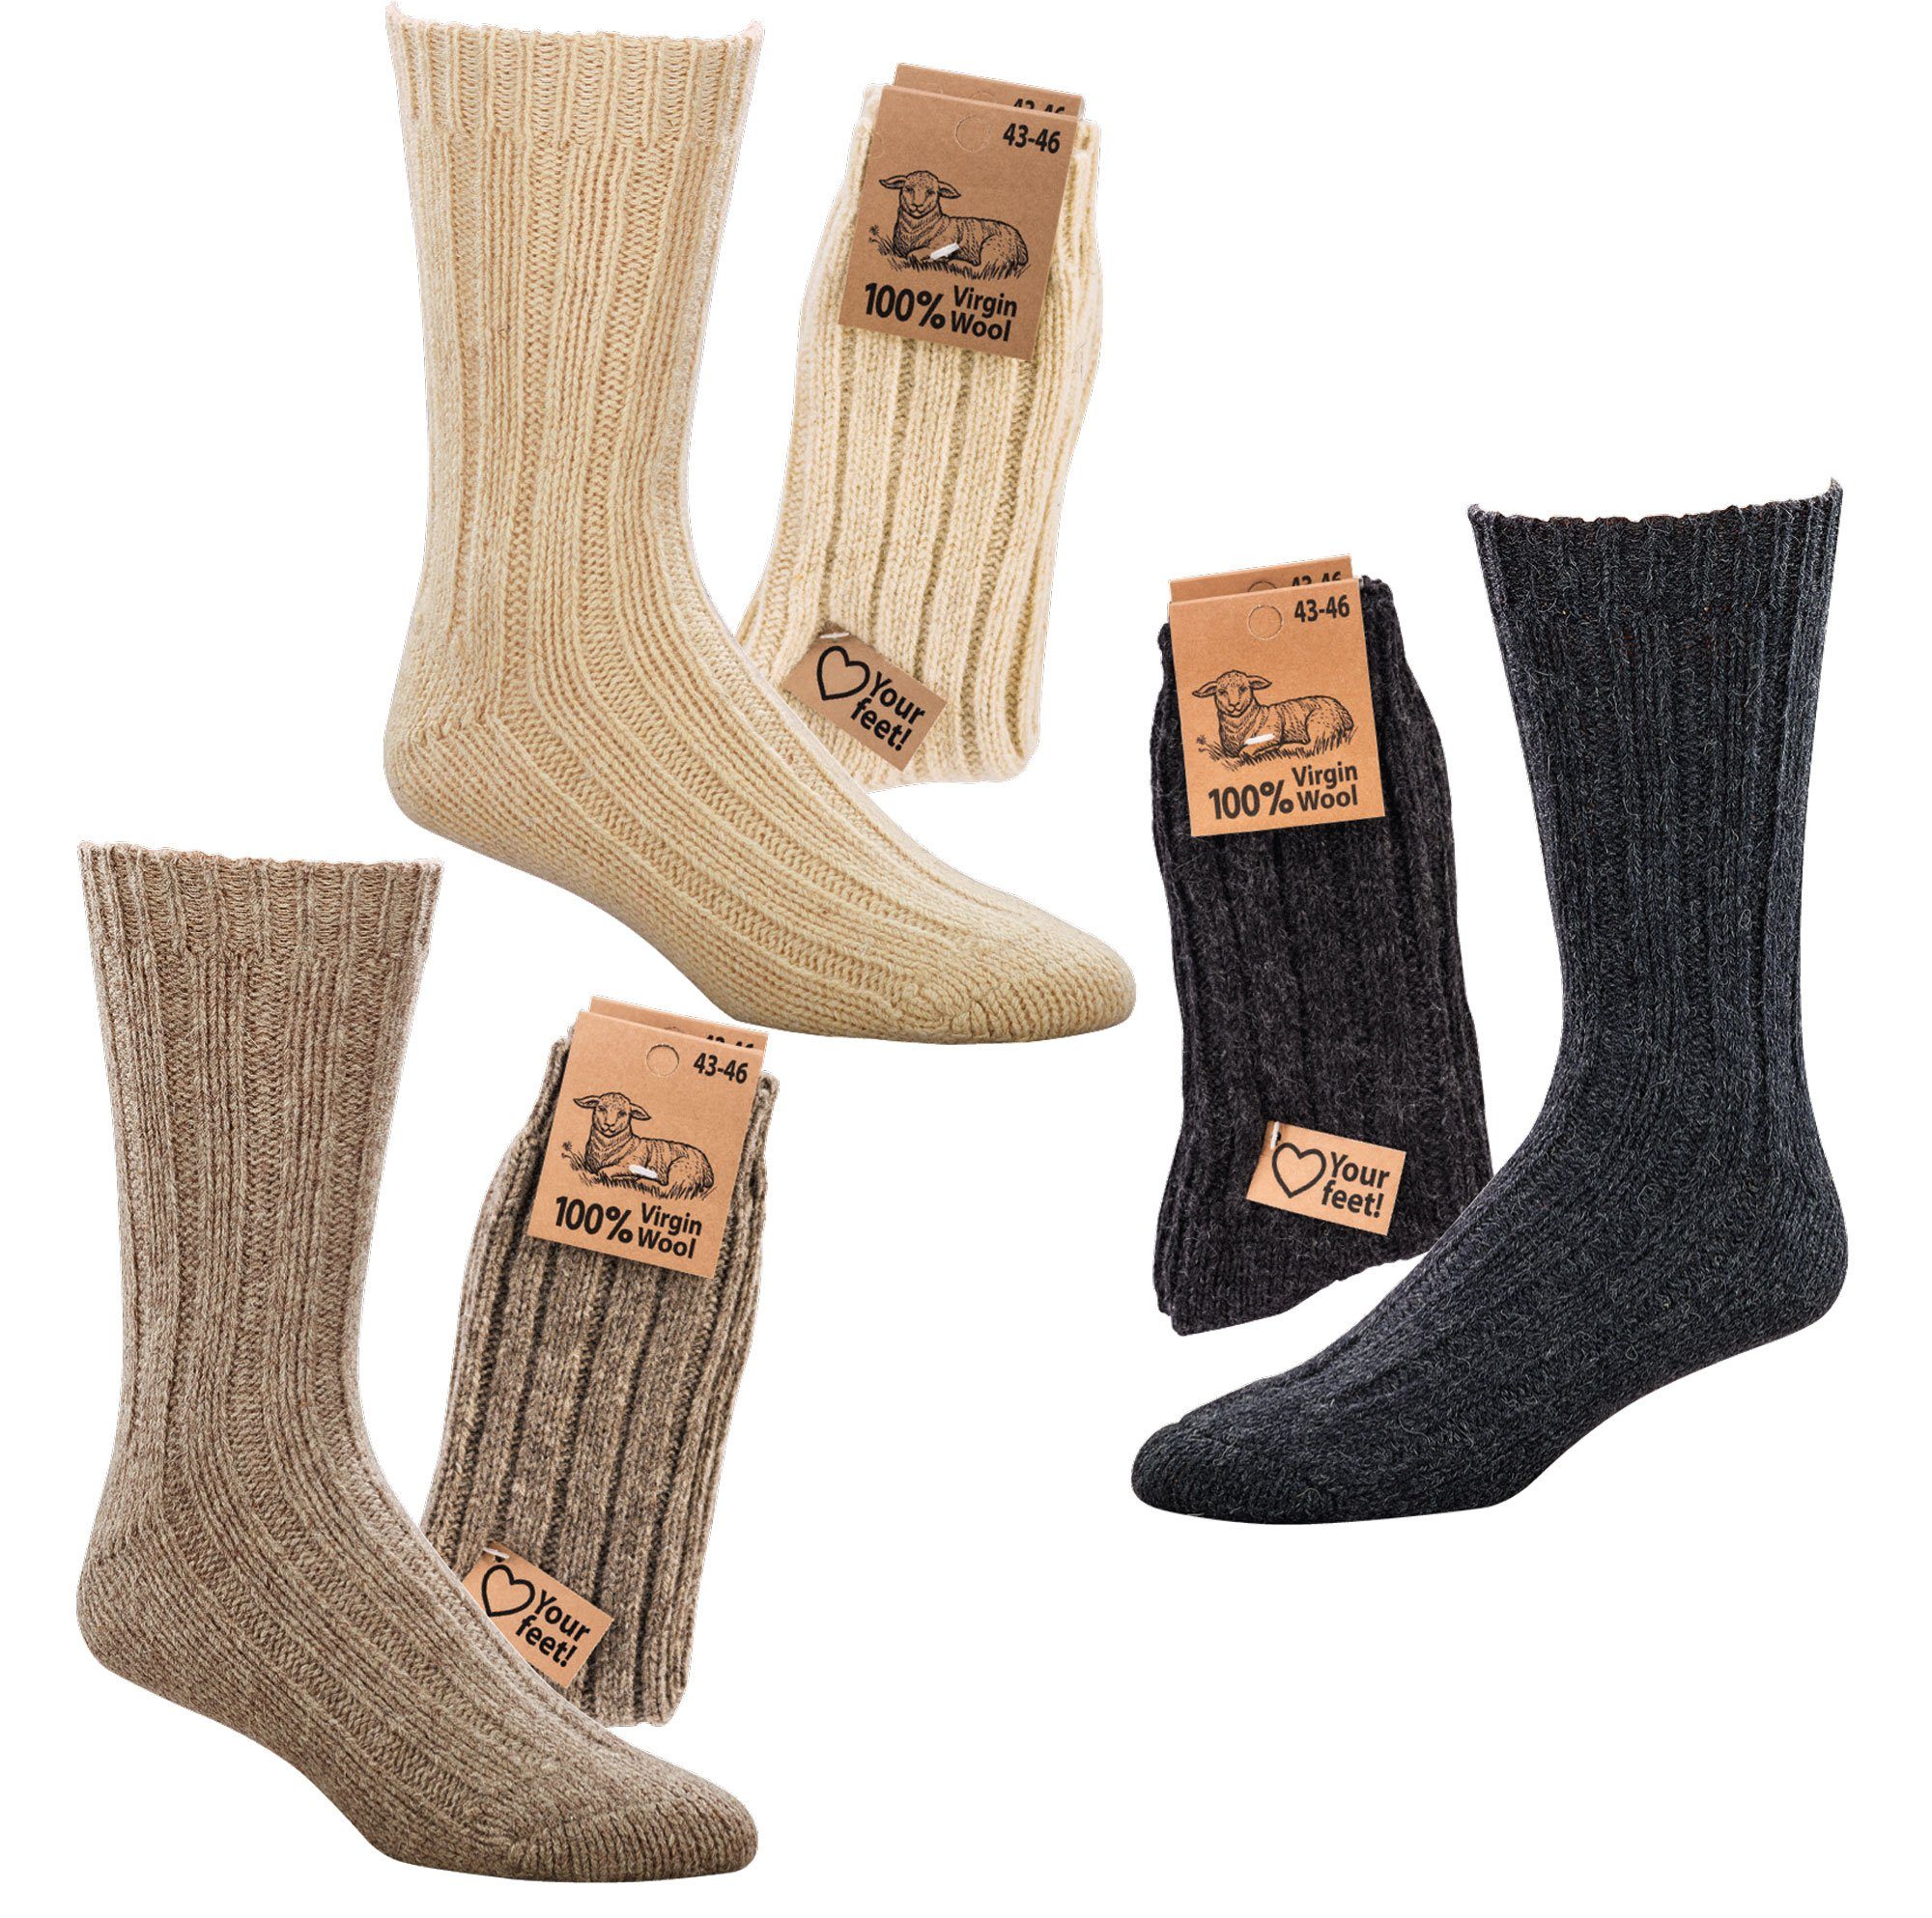 Socks 4 Fun Wowerat Socken Warme Wollsocken 100% "Virgin Wool" Grobstrick Schafwolle (2 Paar) braun